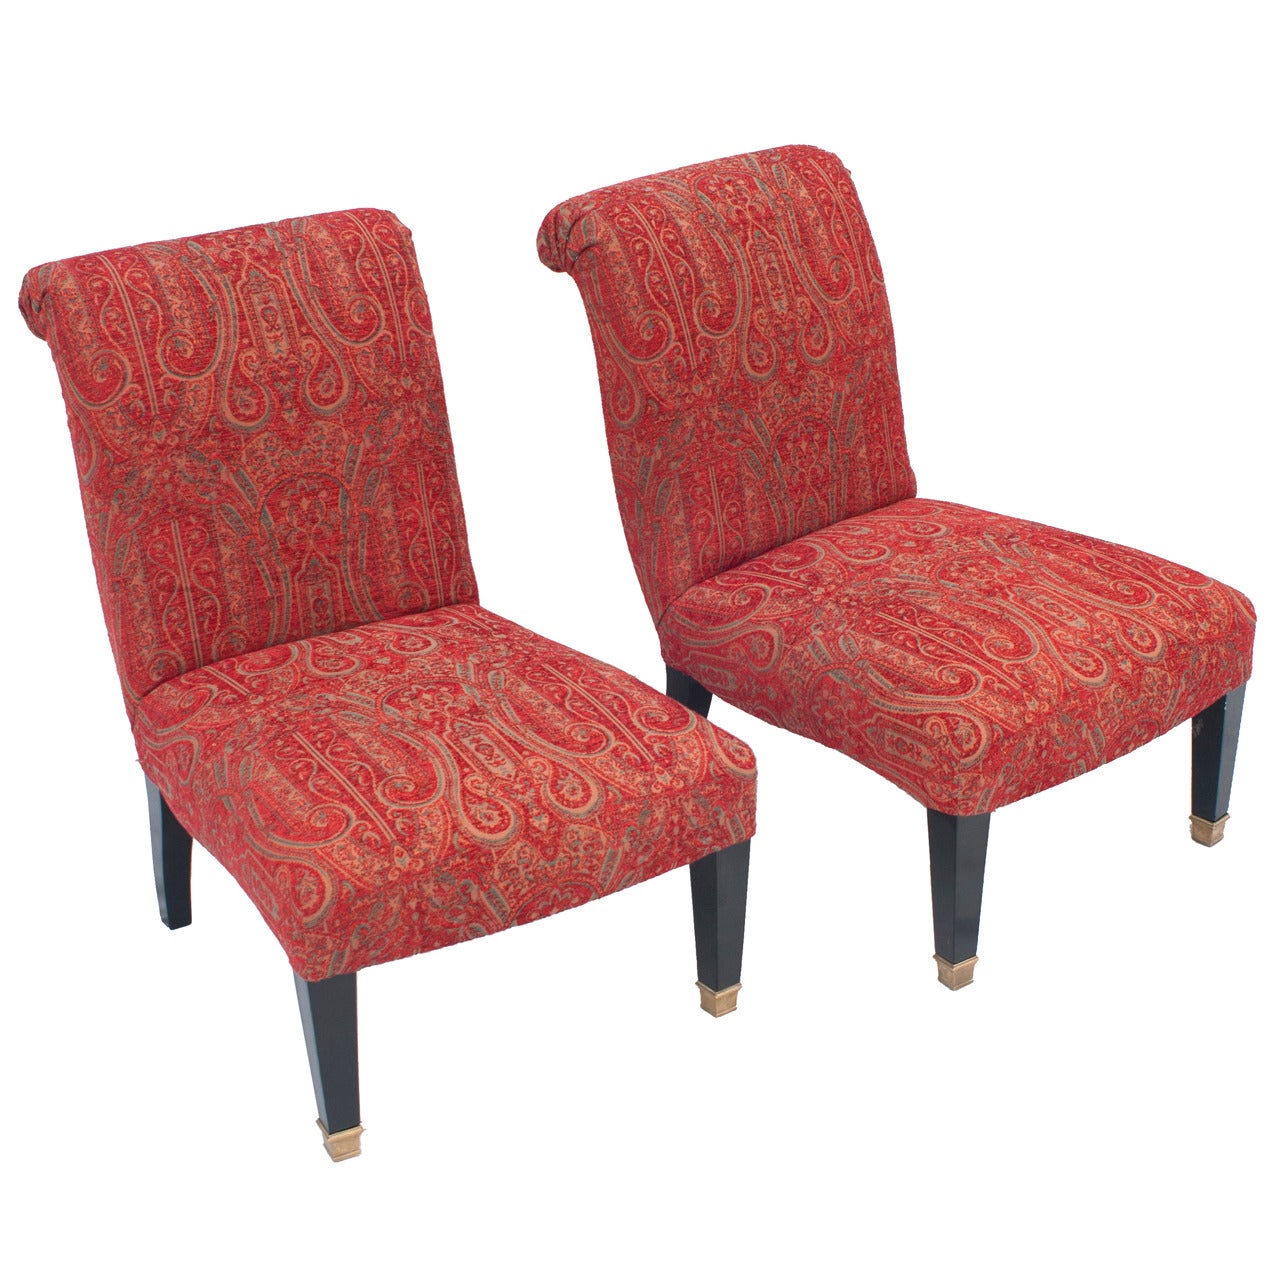 Pair of "Jansen" Slipper Chairs with Brass Caster Legs